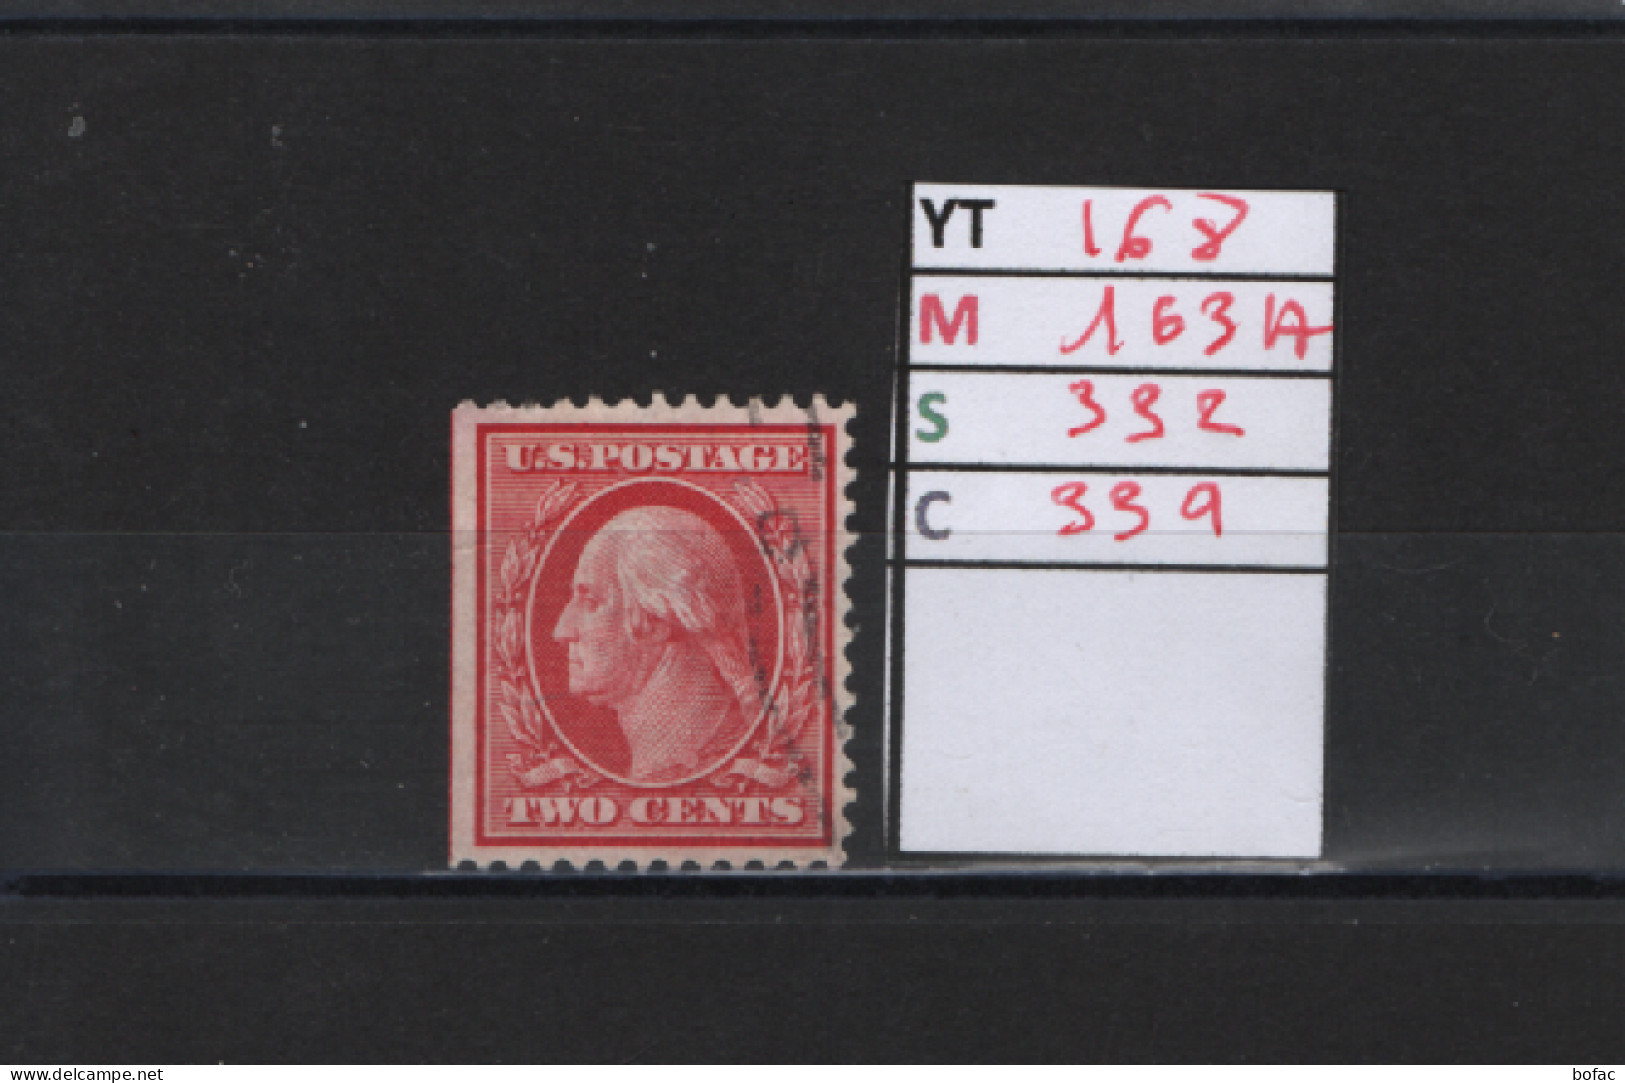 PRIX FIXE Obl 168 YT 163A MIC 332 SCOT 339 GIB George Washington 1908 1909 58/05 Dentelé 3 Cotés - Used Stamps